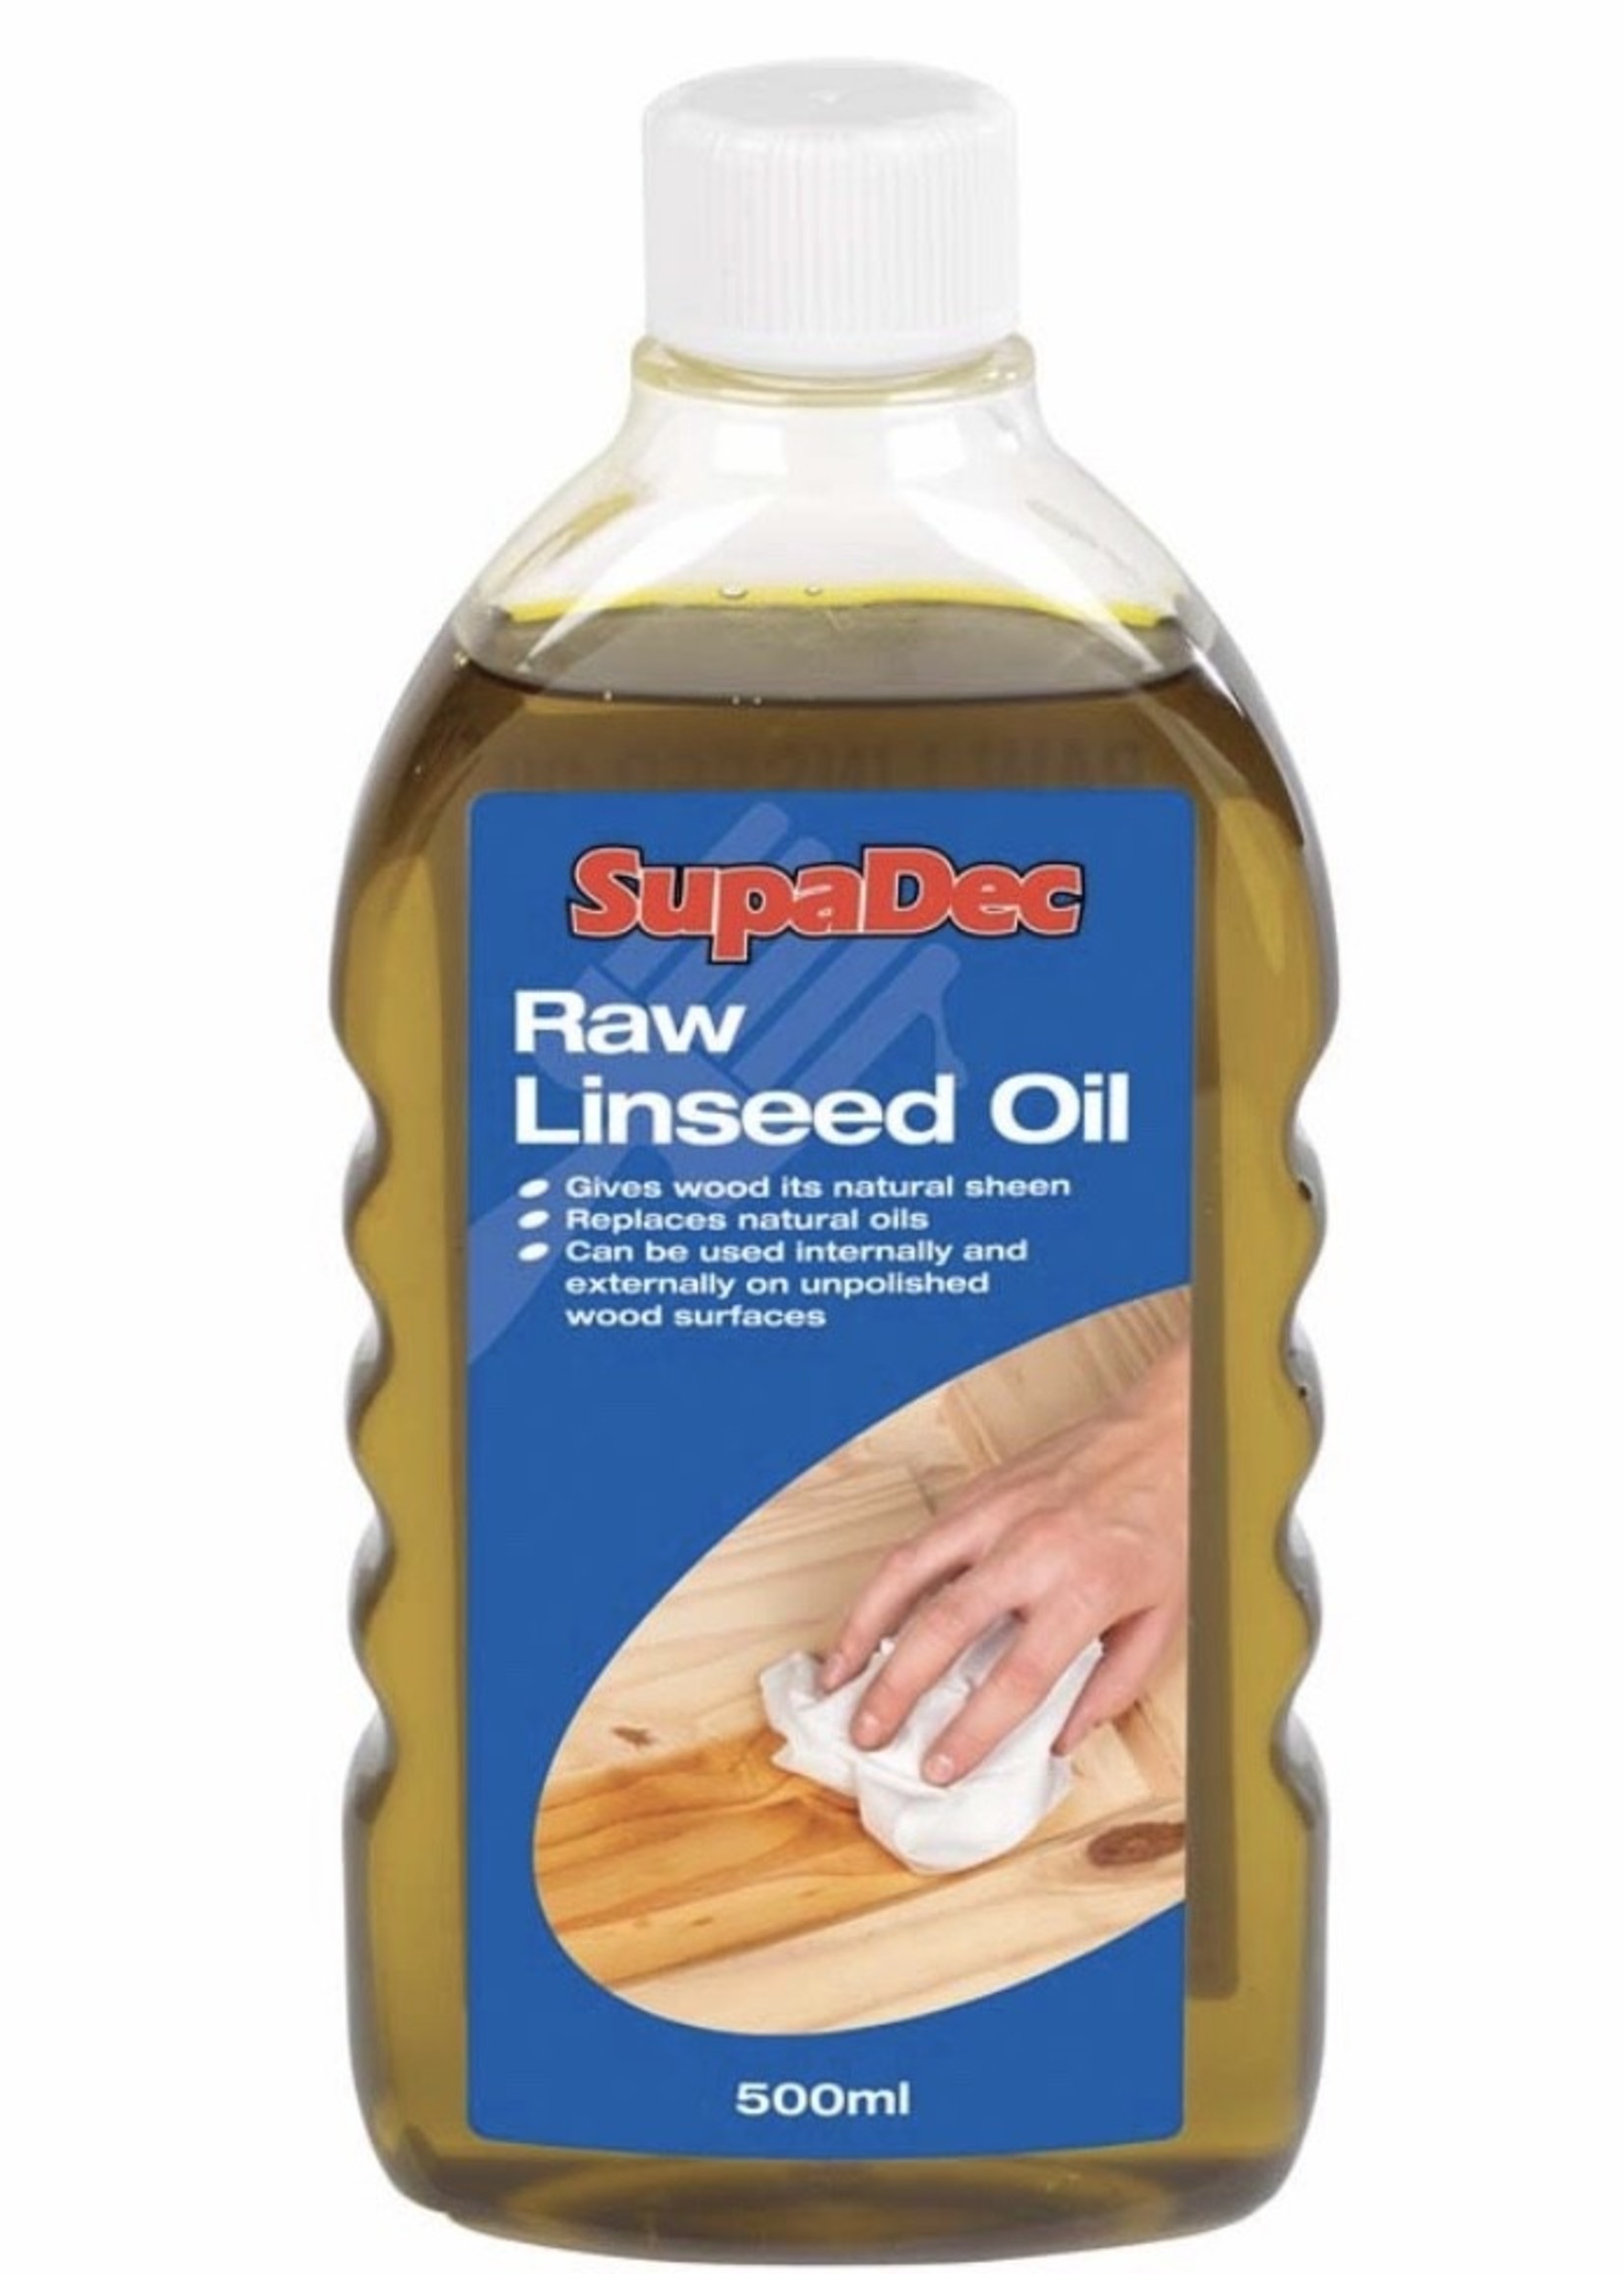 SupaDec SupaDec Raw Linseed Oil 500ml